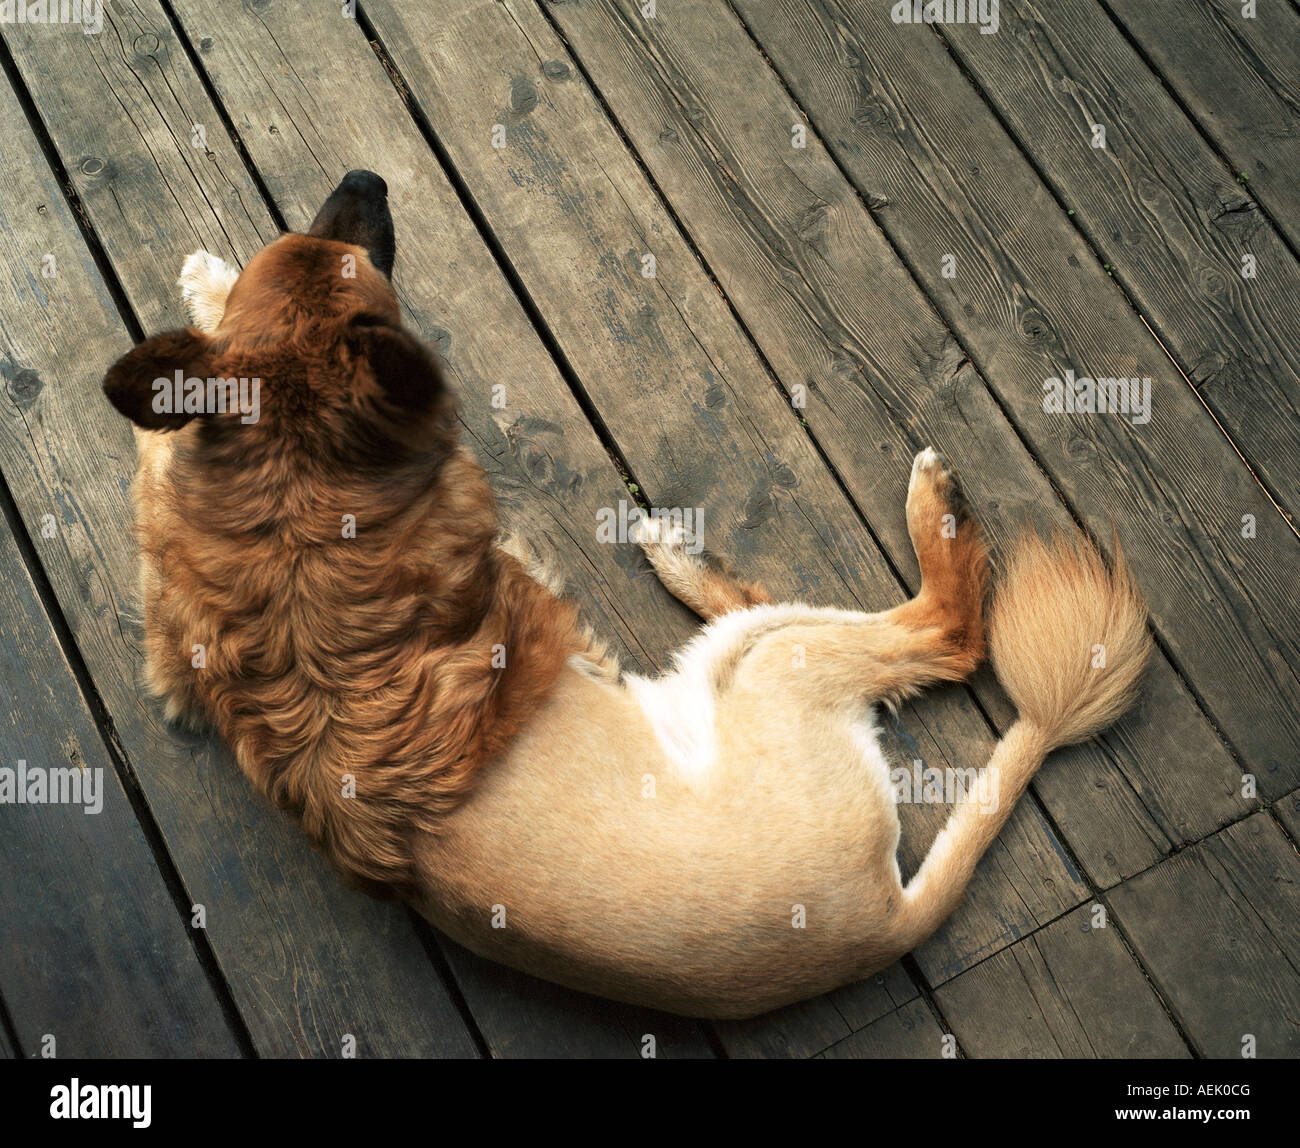 Sheepdog mongrel shorn like a lion Stock Photo